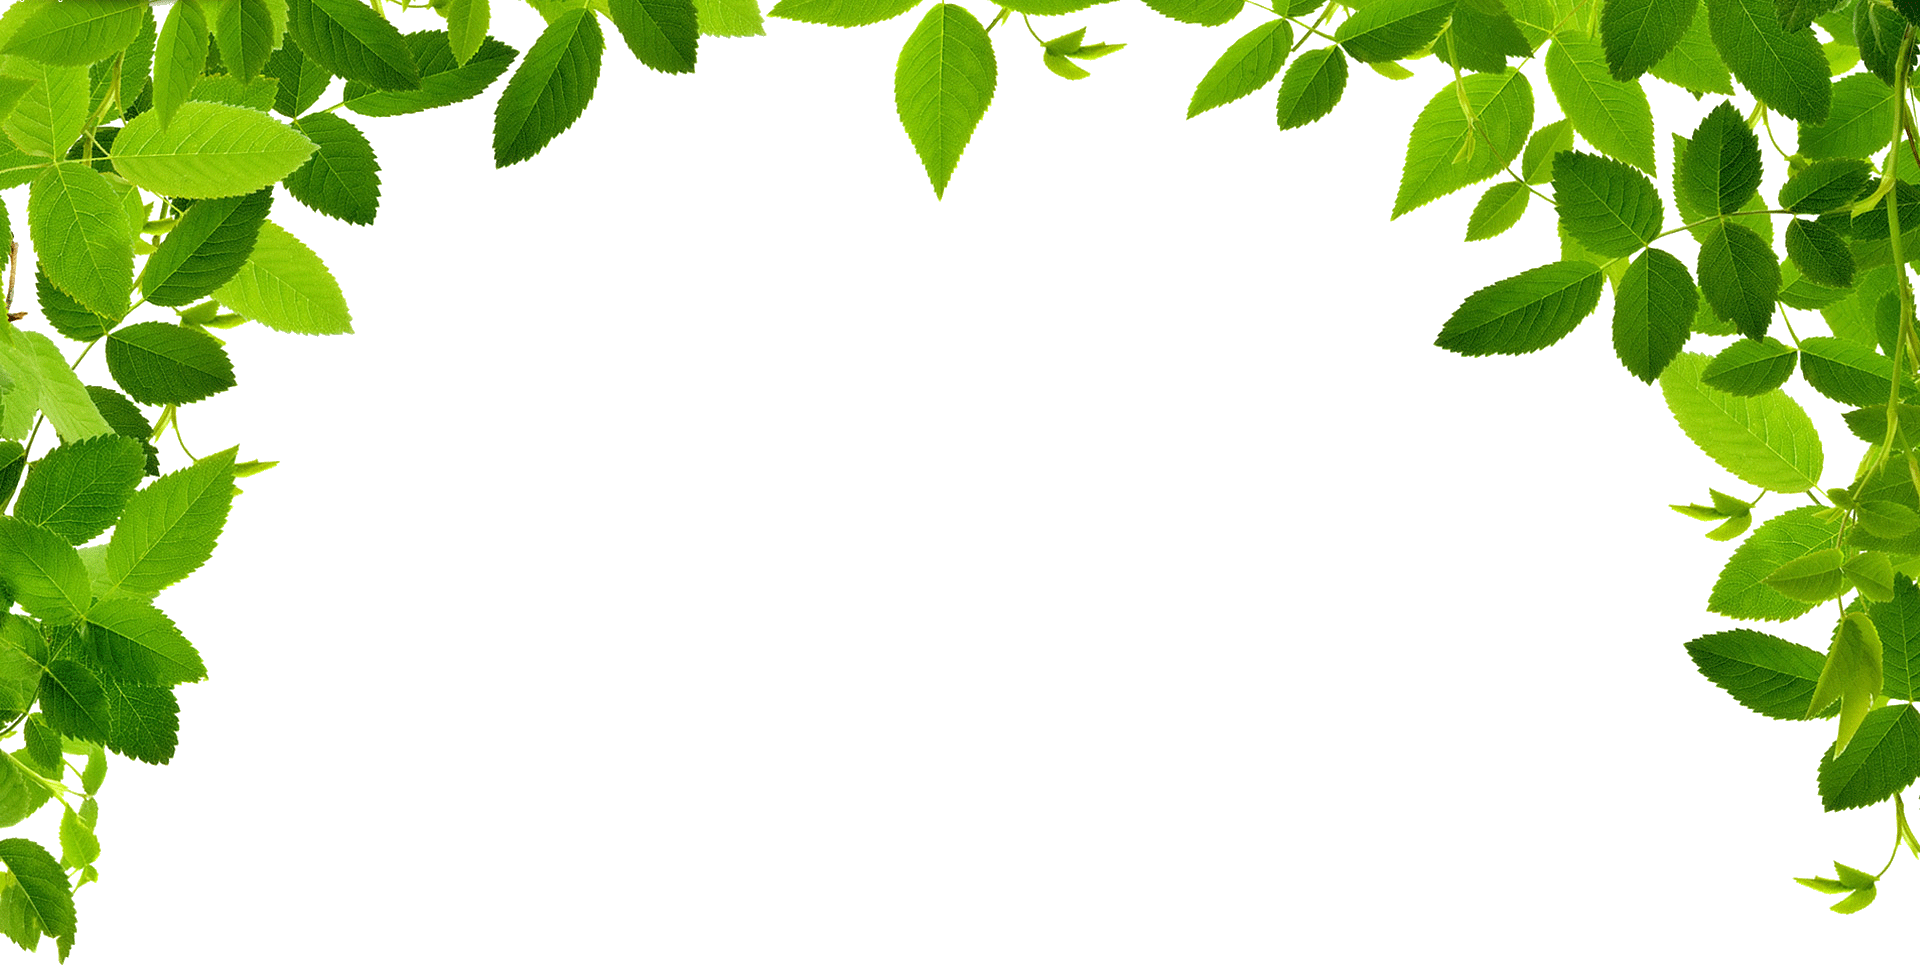 Jungle leaf borders with transparent background